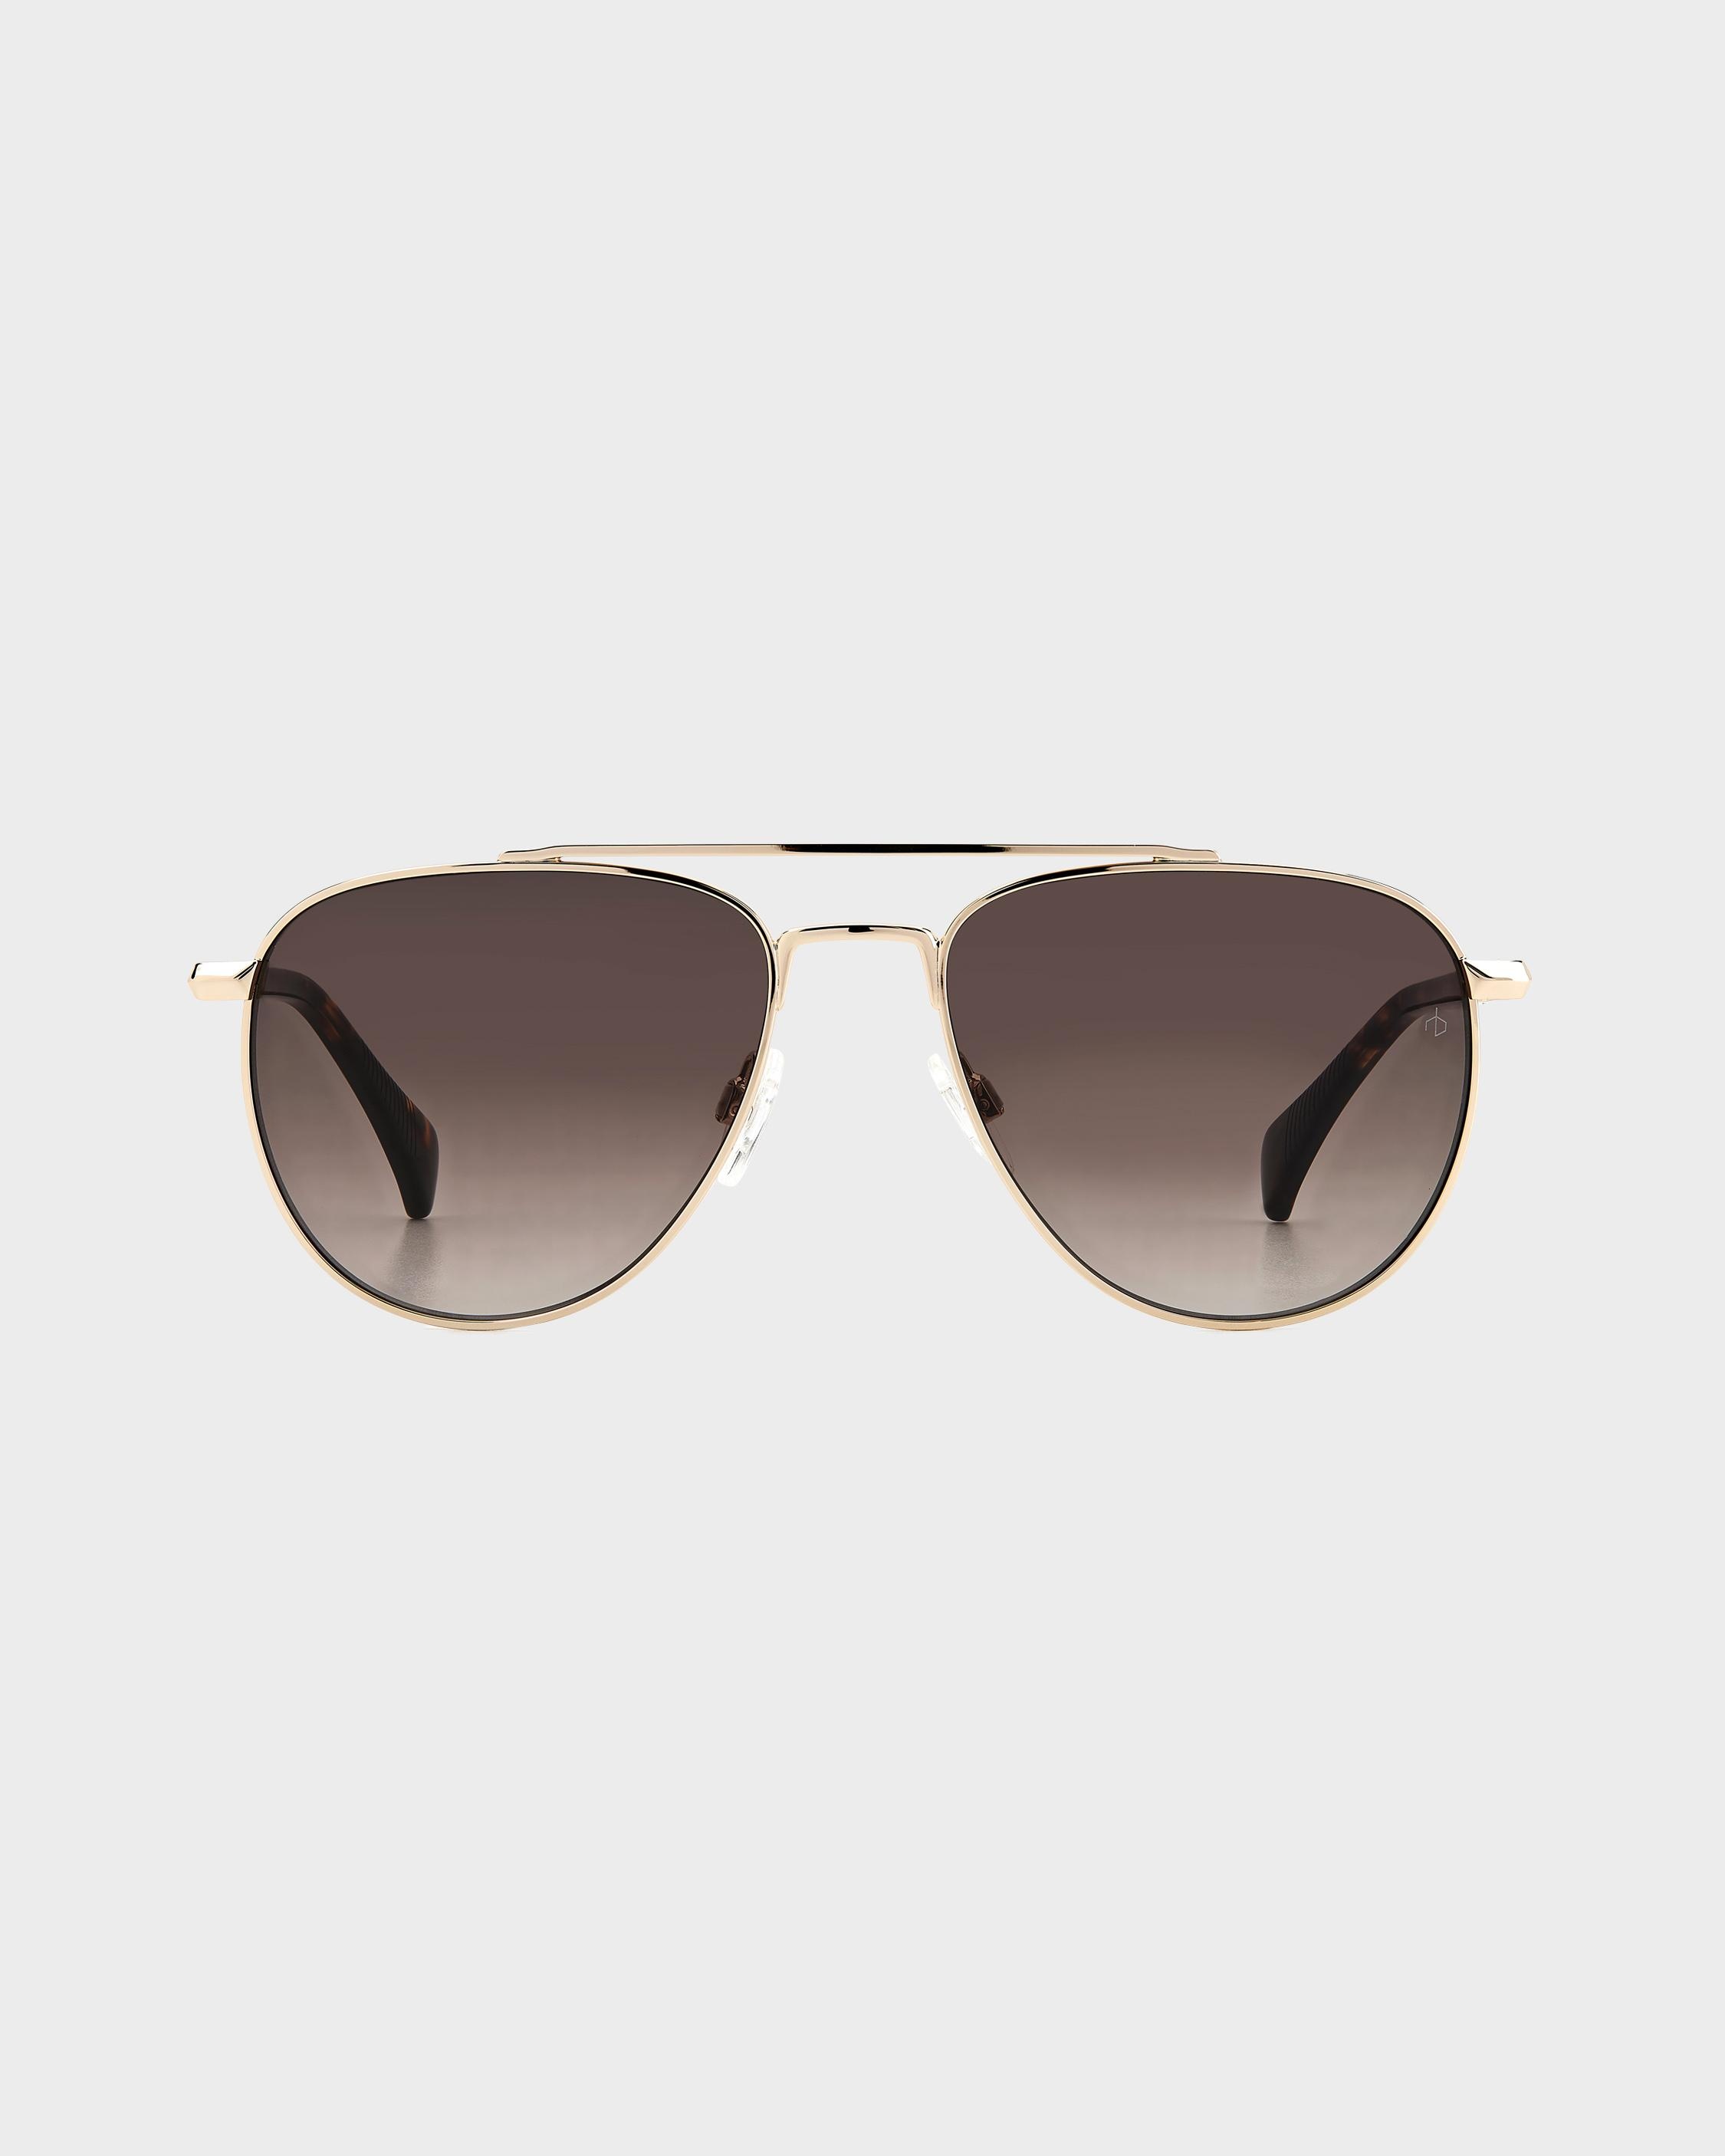 Lana
Aviator Sunglasses - 2